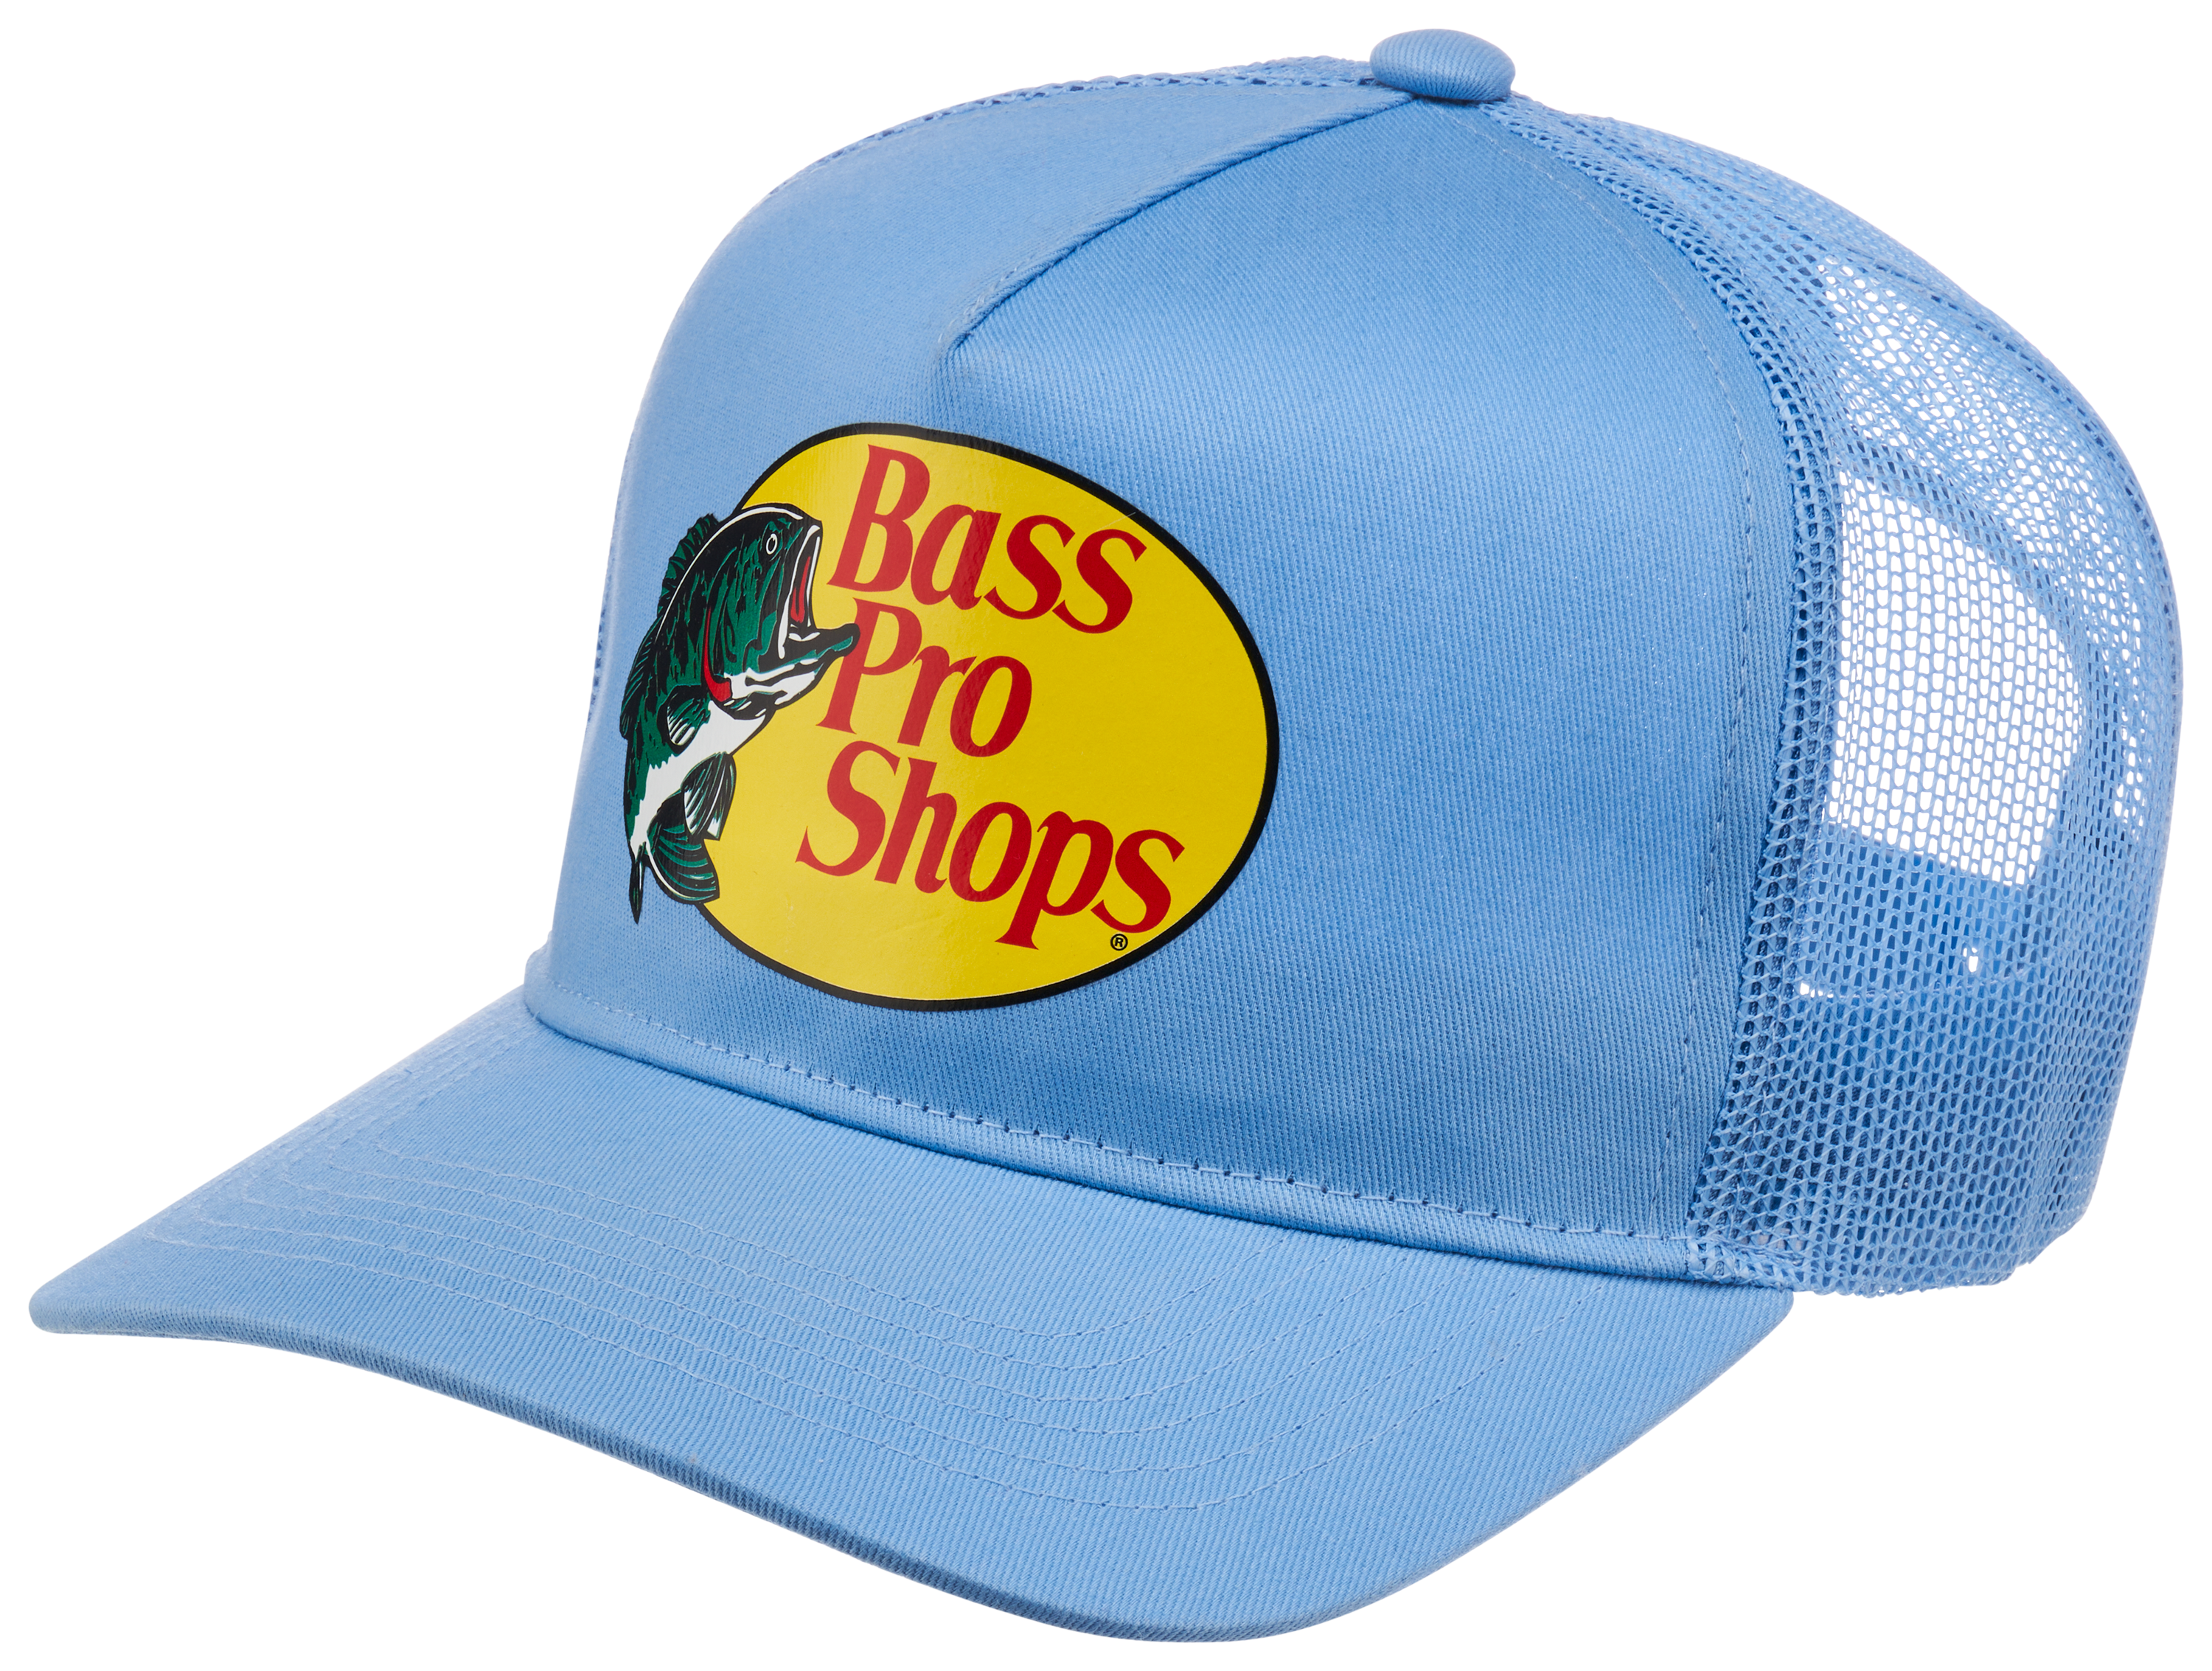 Bass Pro Shops, Accessories